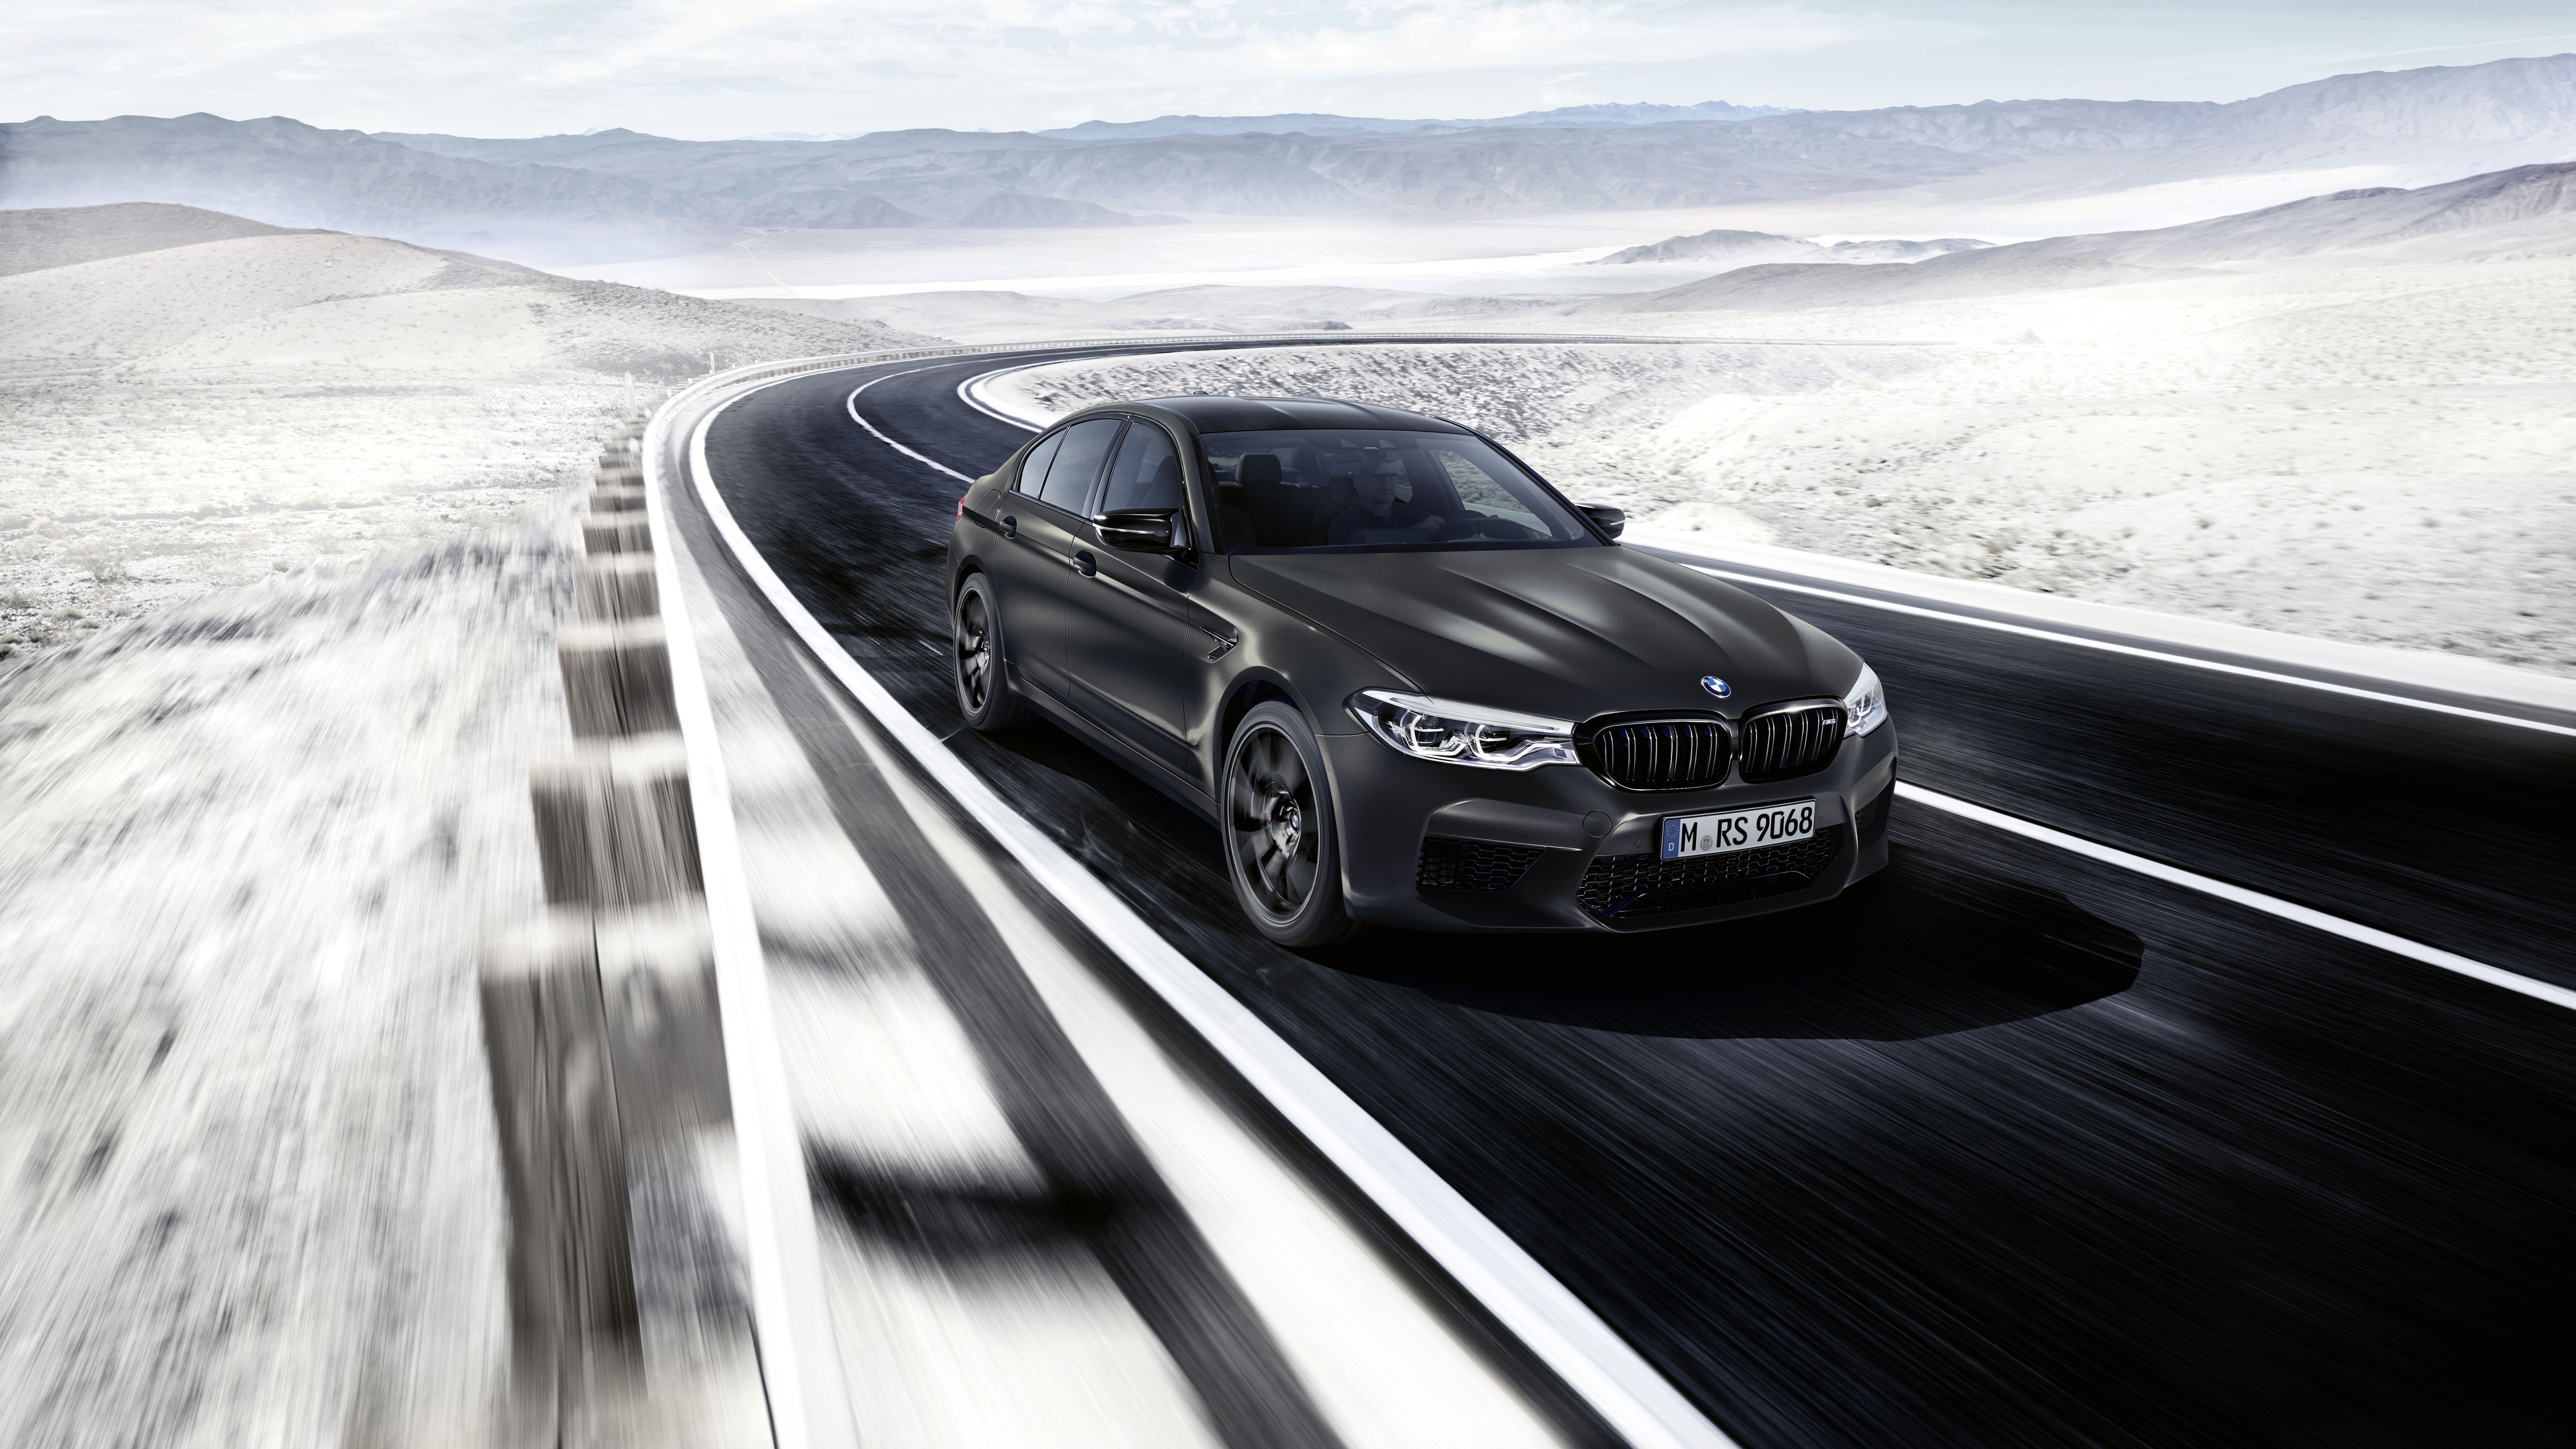 BMW M5 CS 2022 interior design 4K wallpaper download